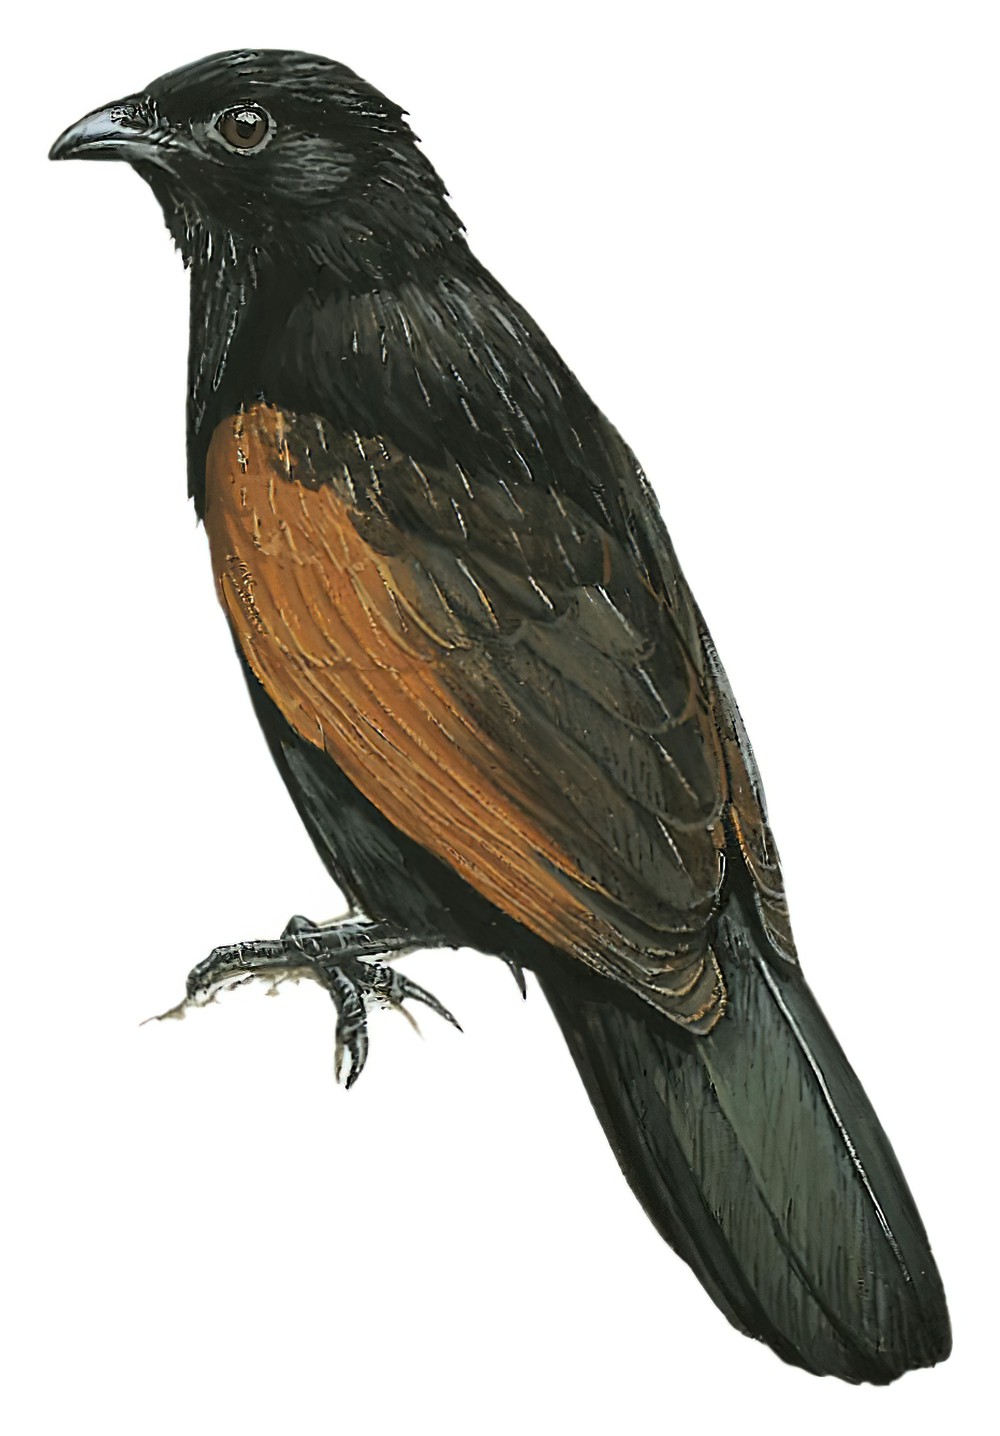 Black Coucal / Centropus grillii